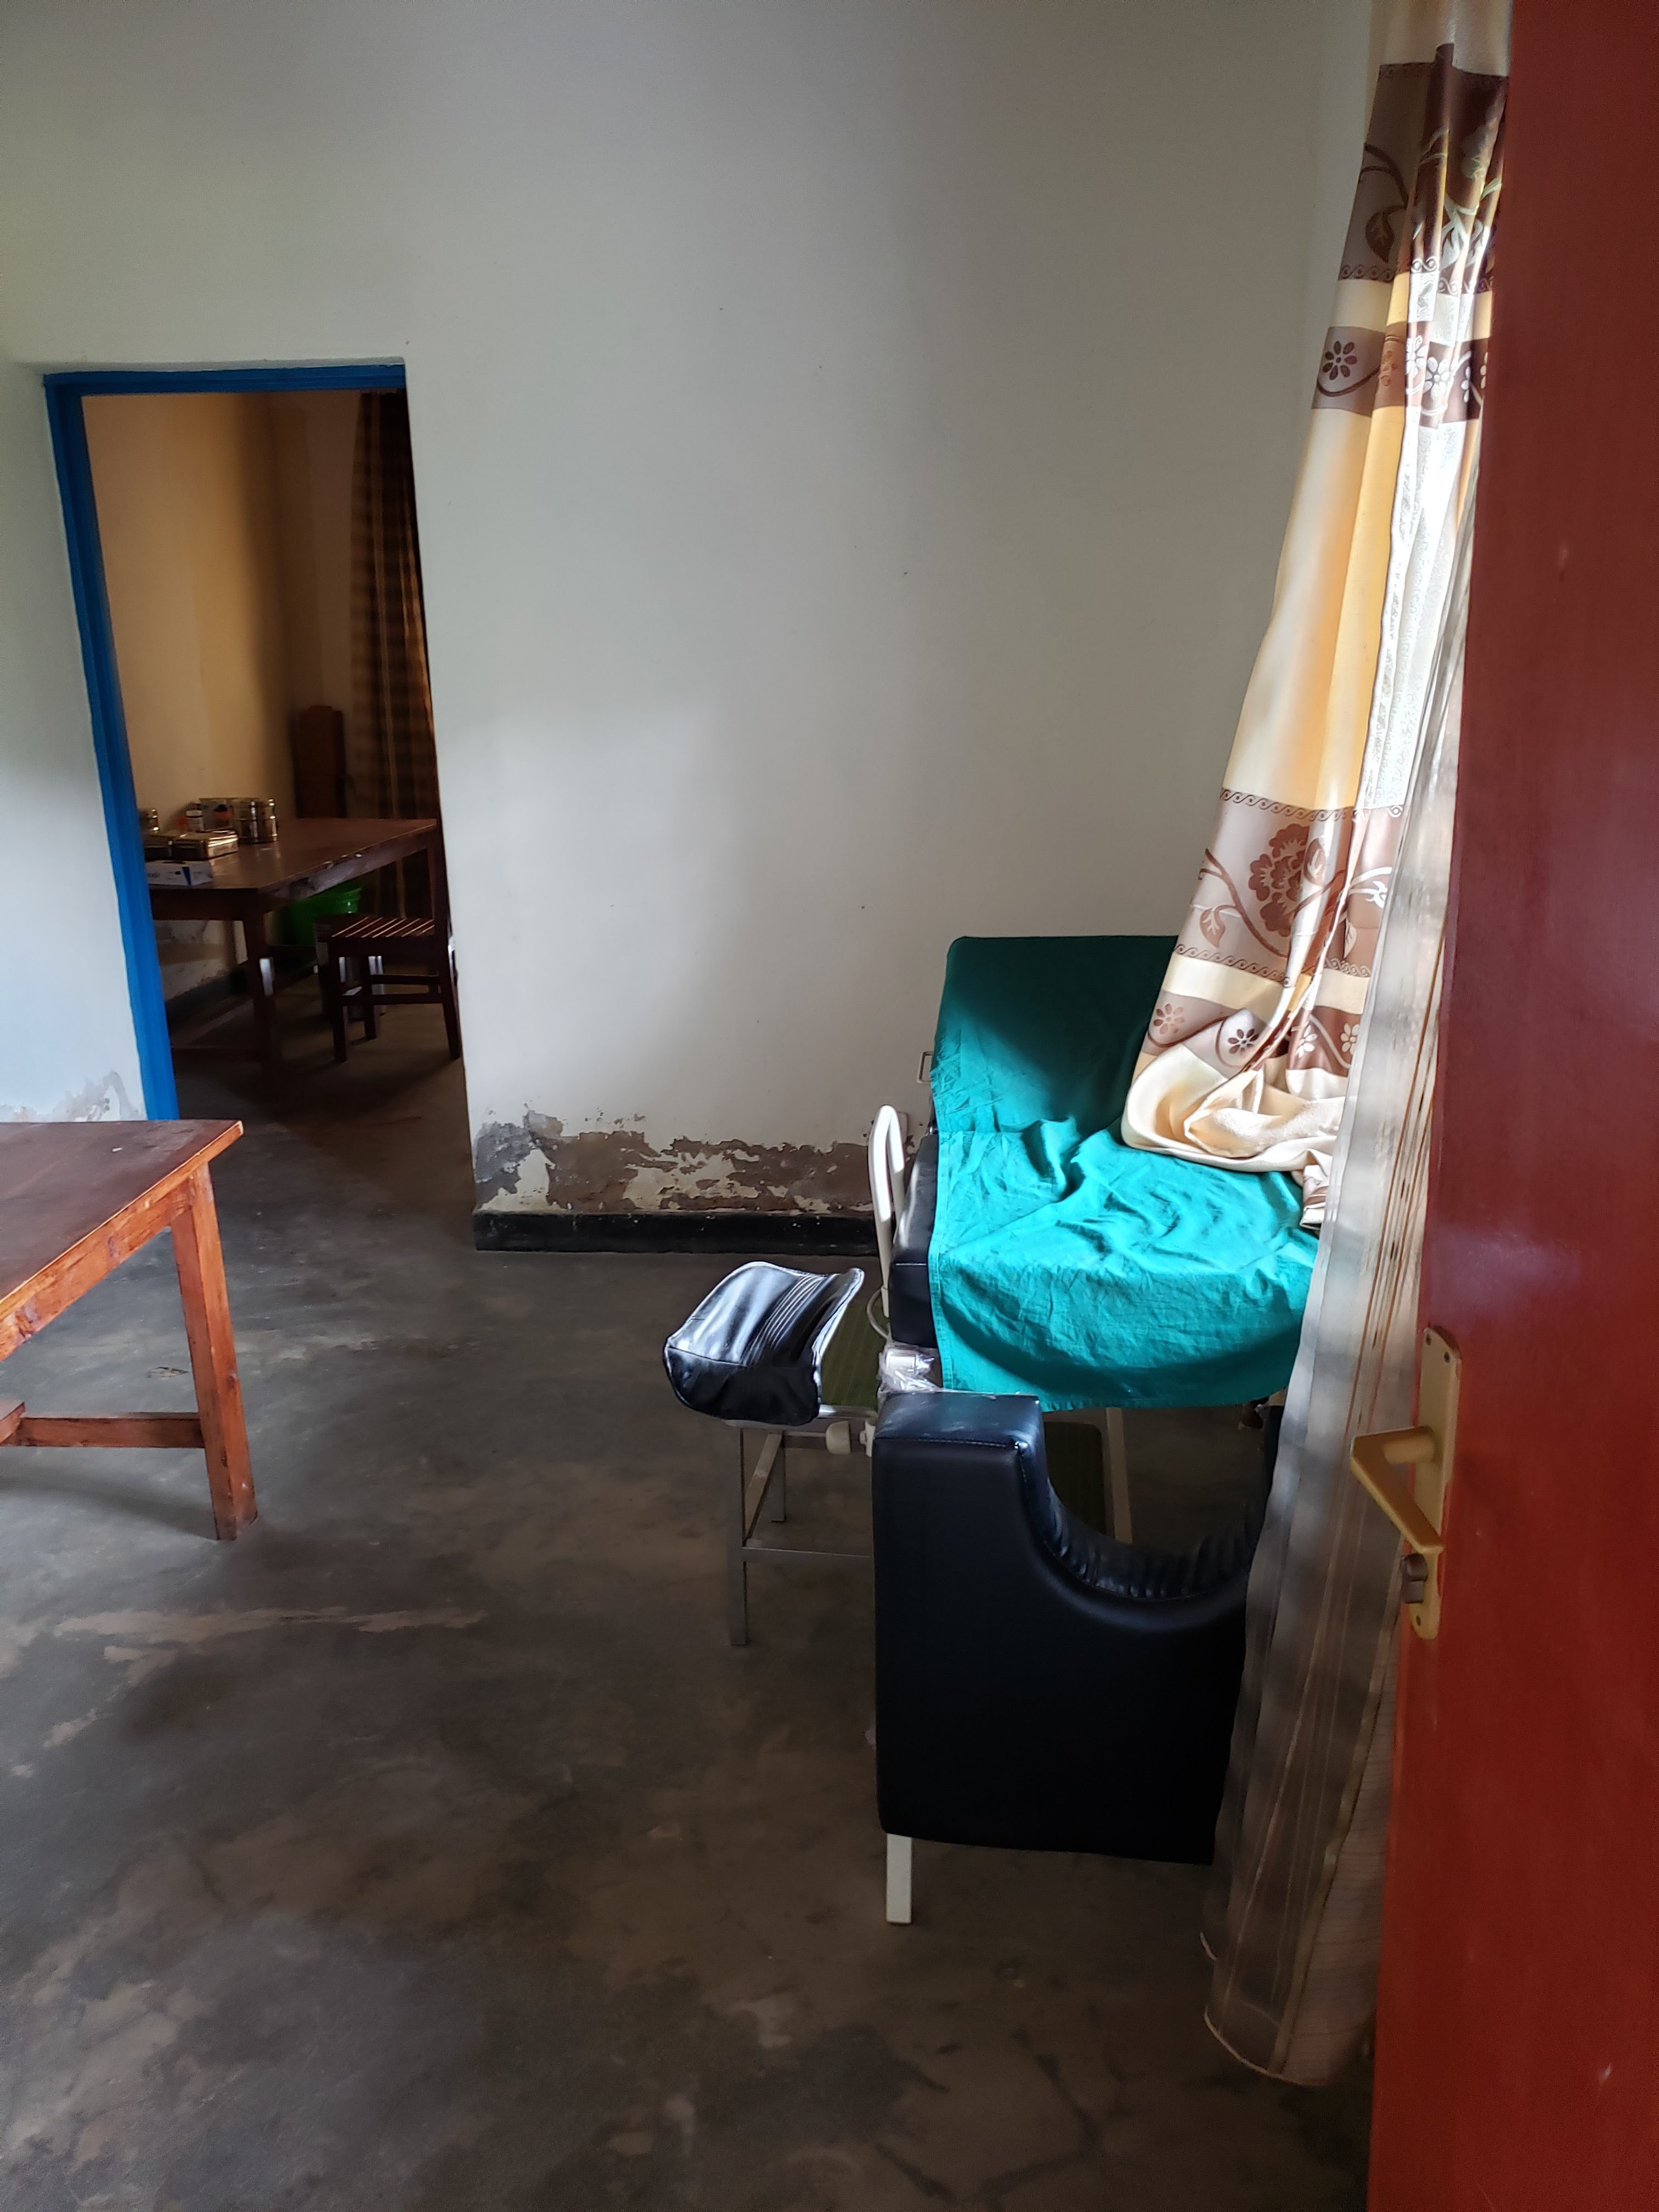 Examination room at Kiruhura Parish’s health post.